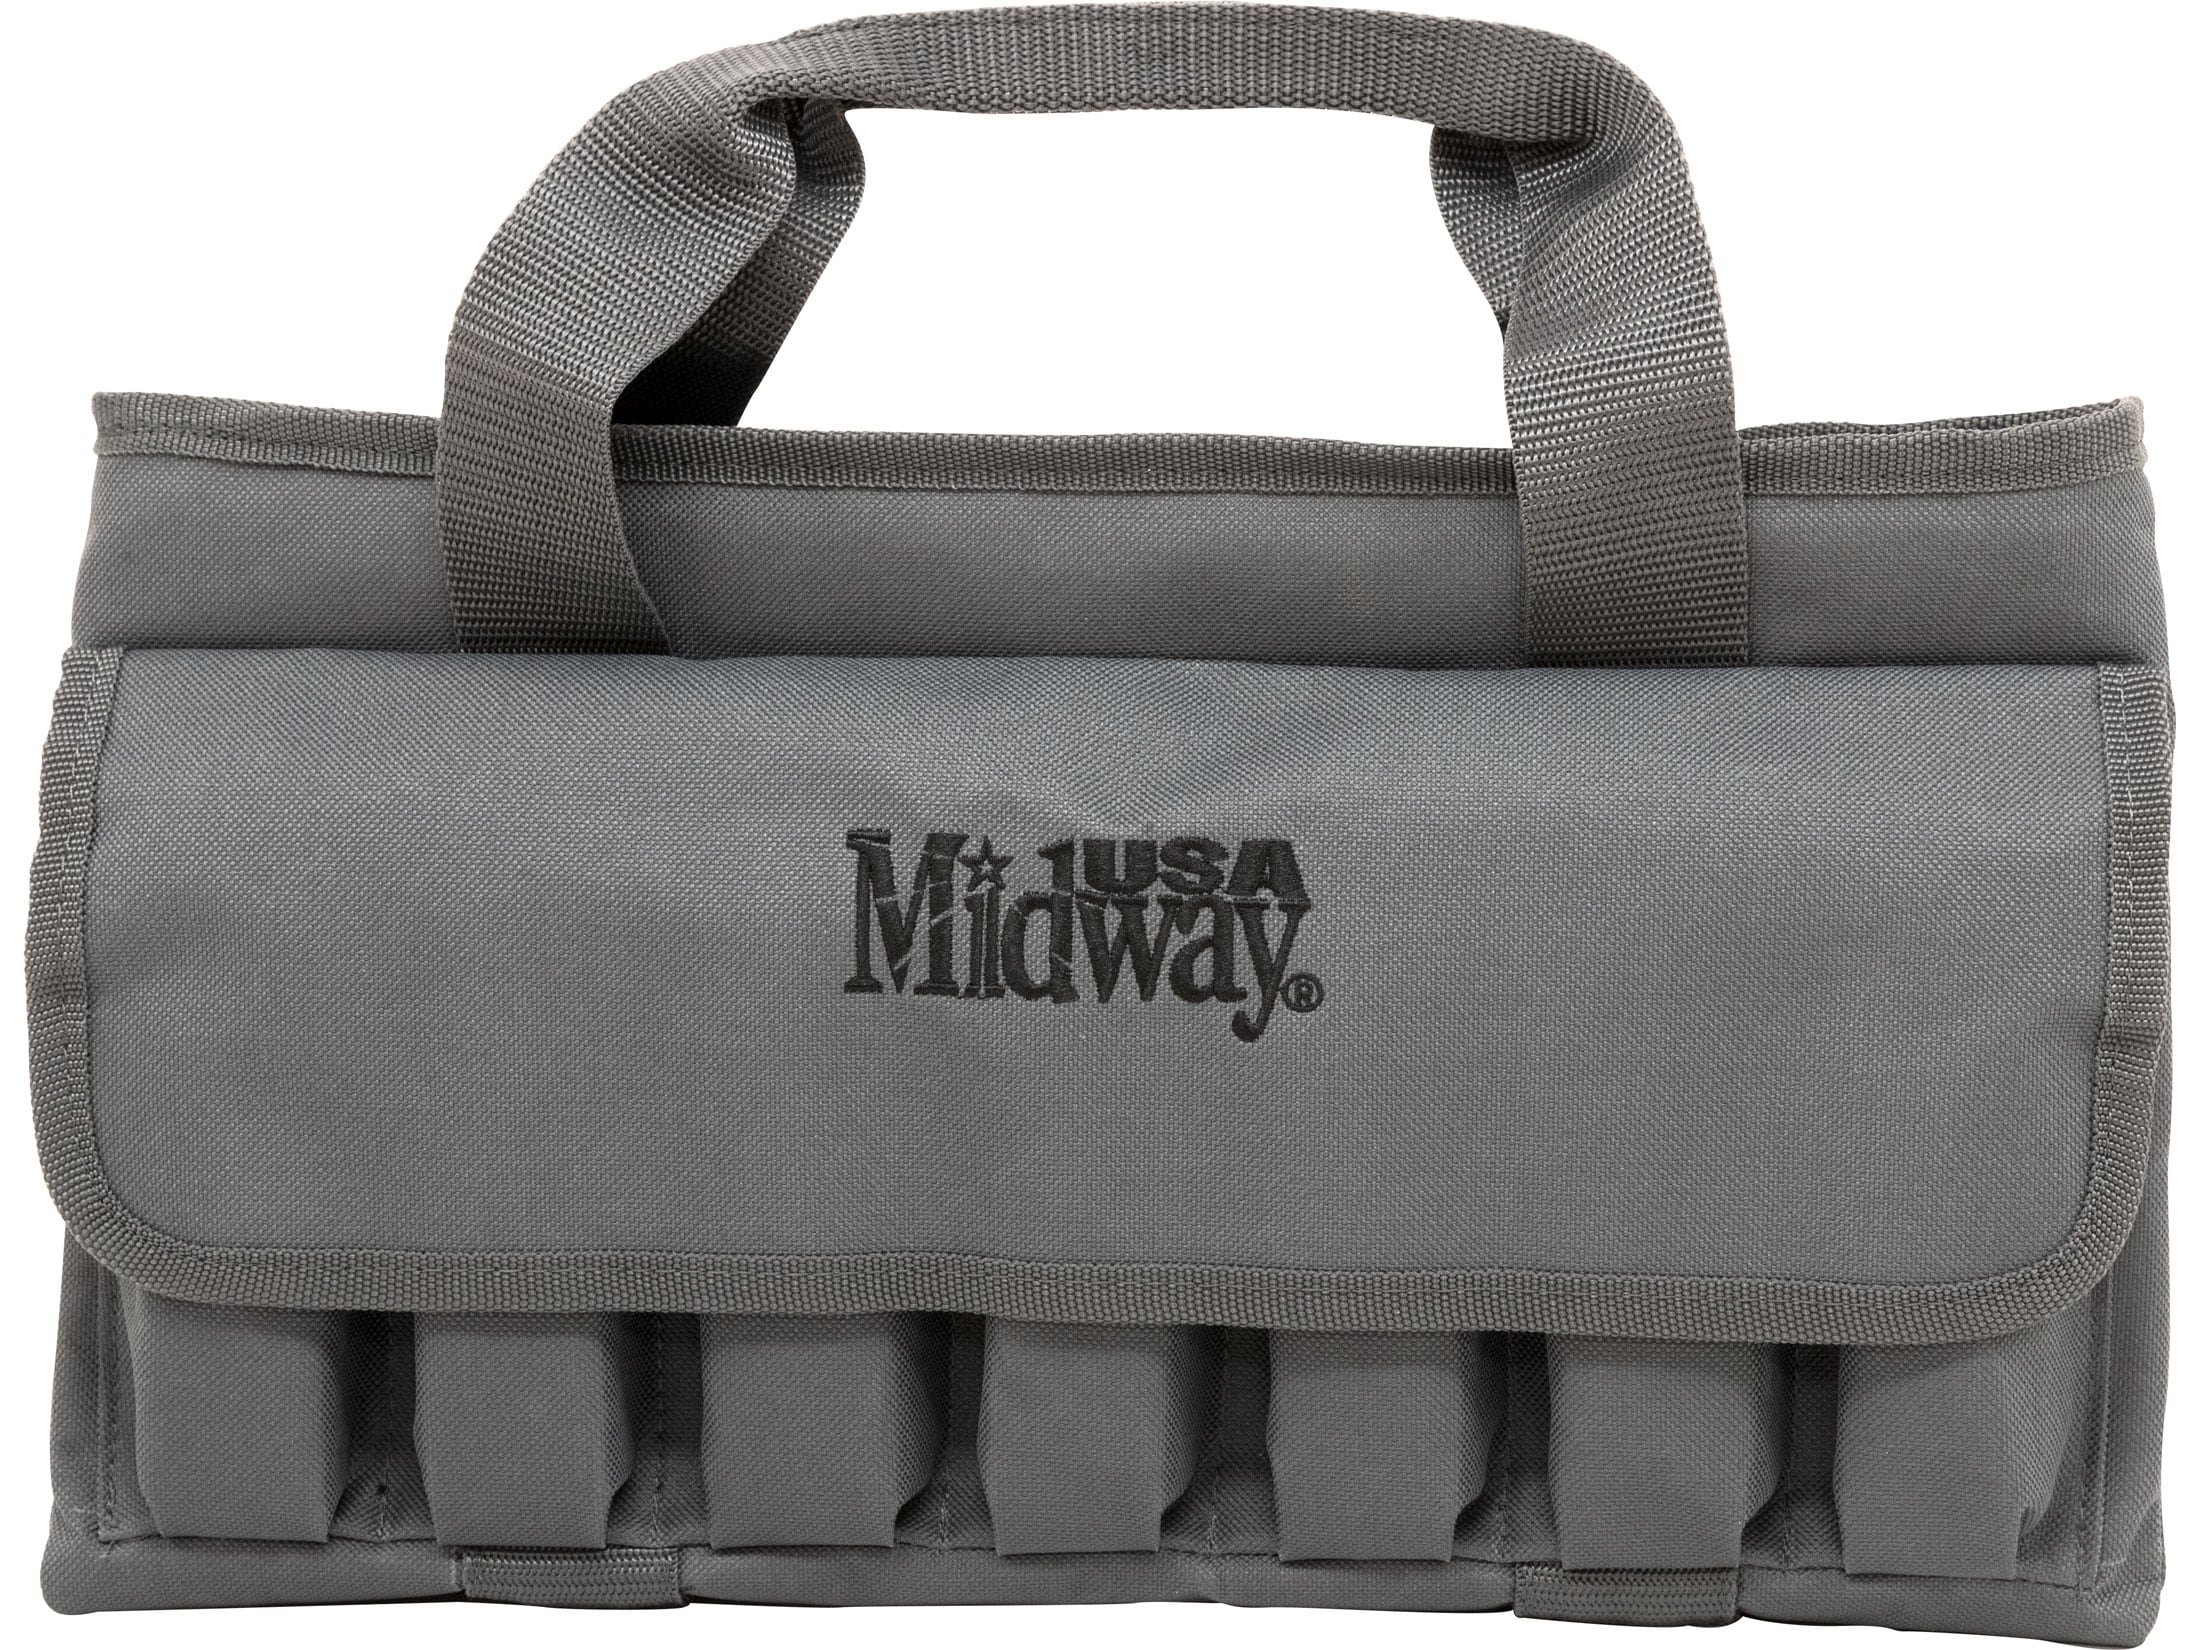 New Nylon Tactical Pistol Case Range Bag Case Handgun Bag Magazine Pouch Storage 